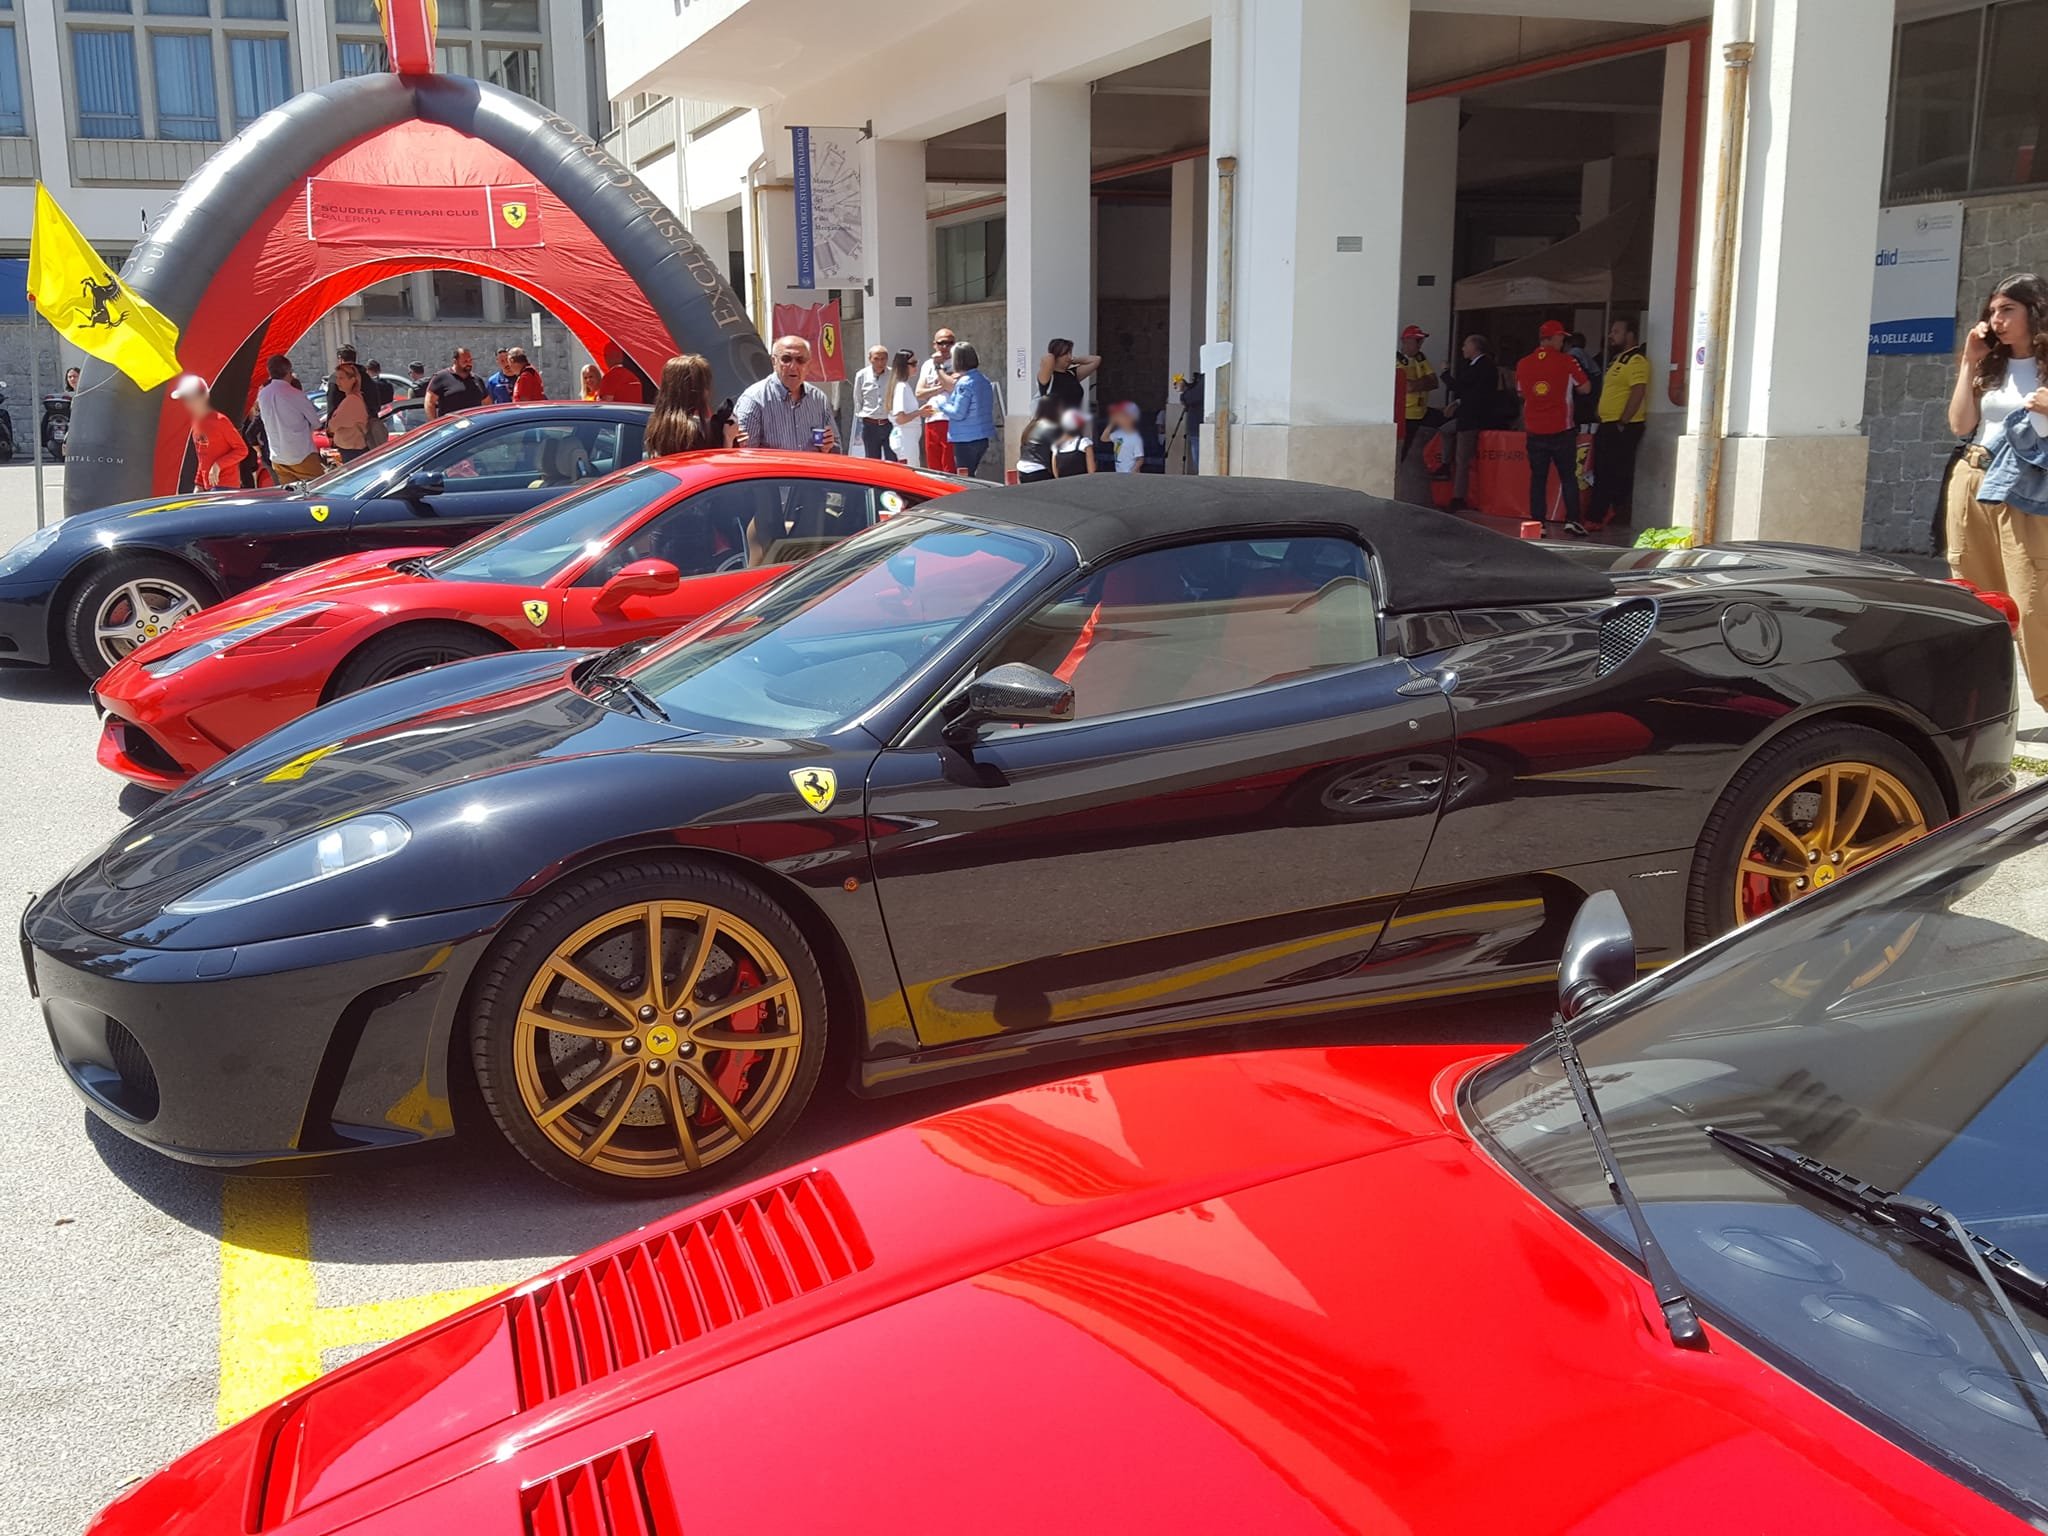 Ferrari Club